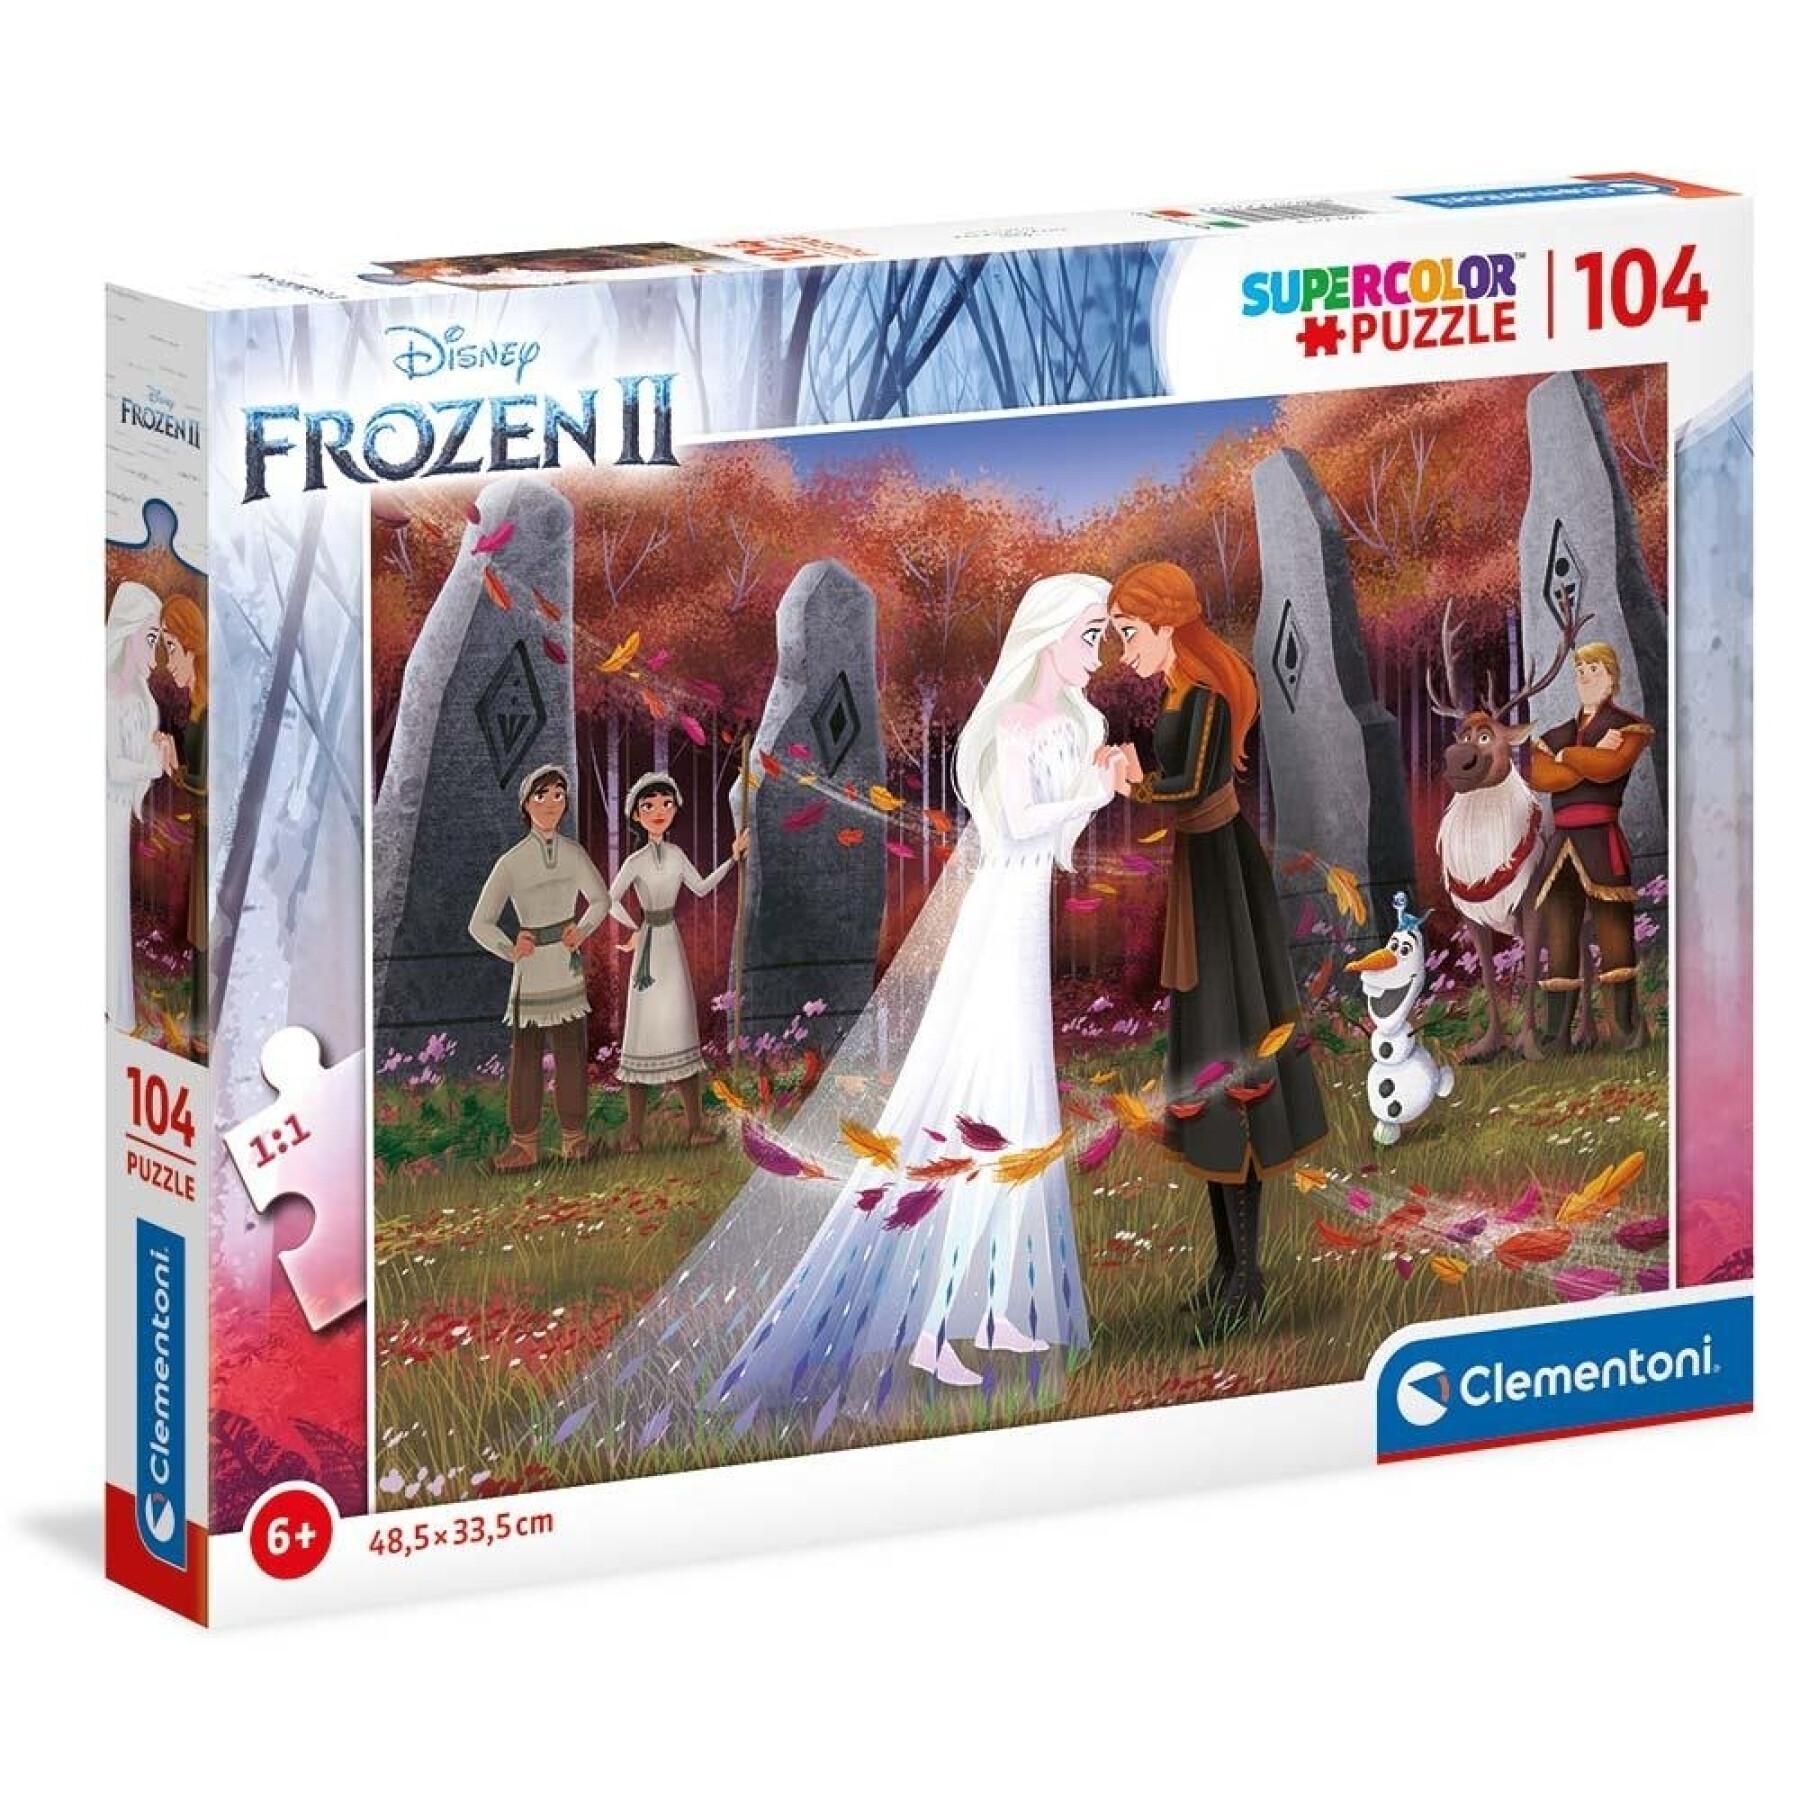 Puzzle of 104 pieces Frozen II